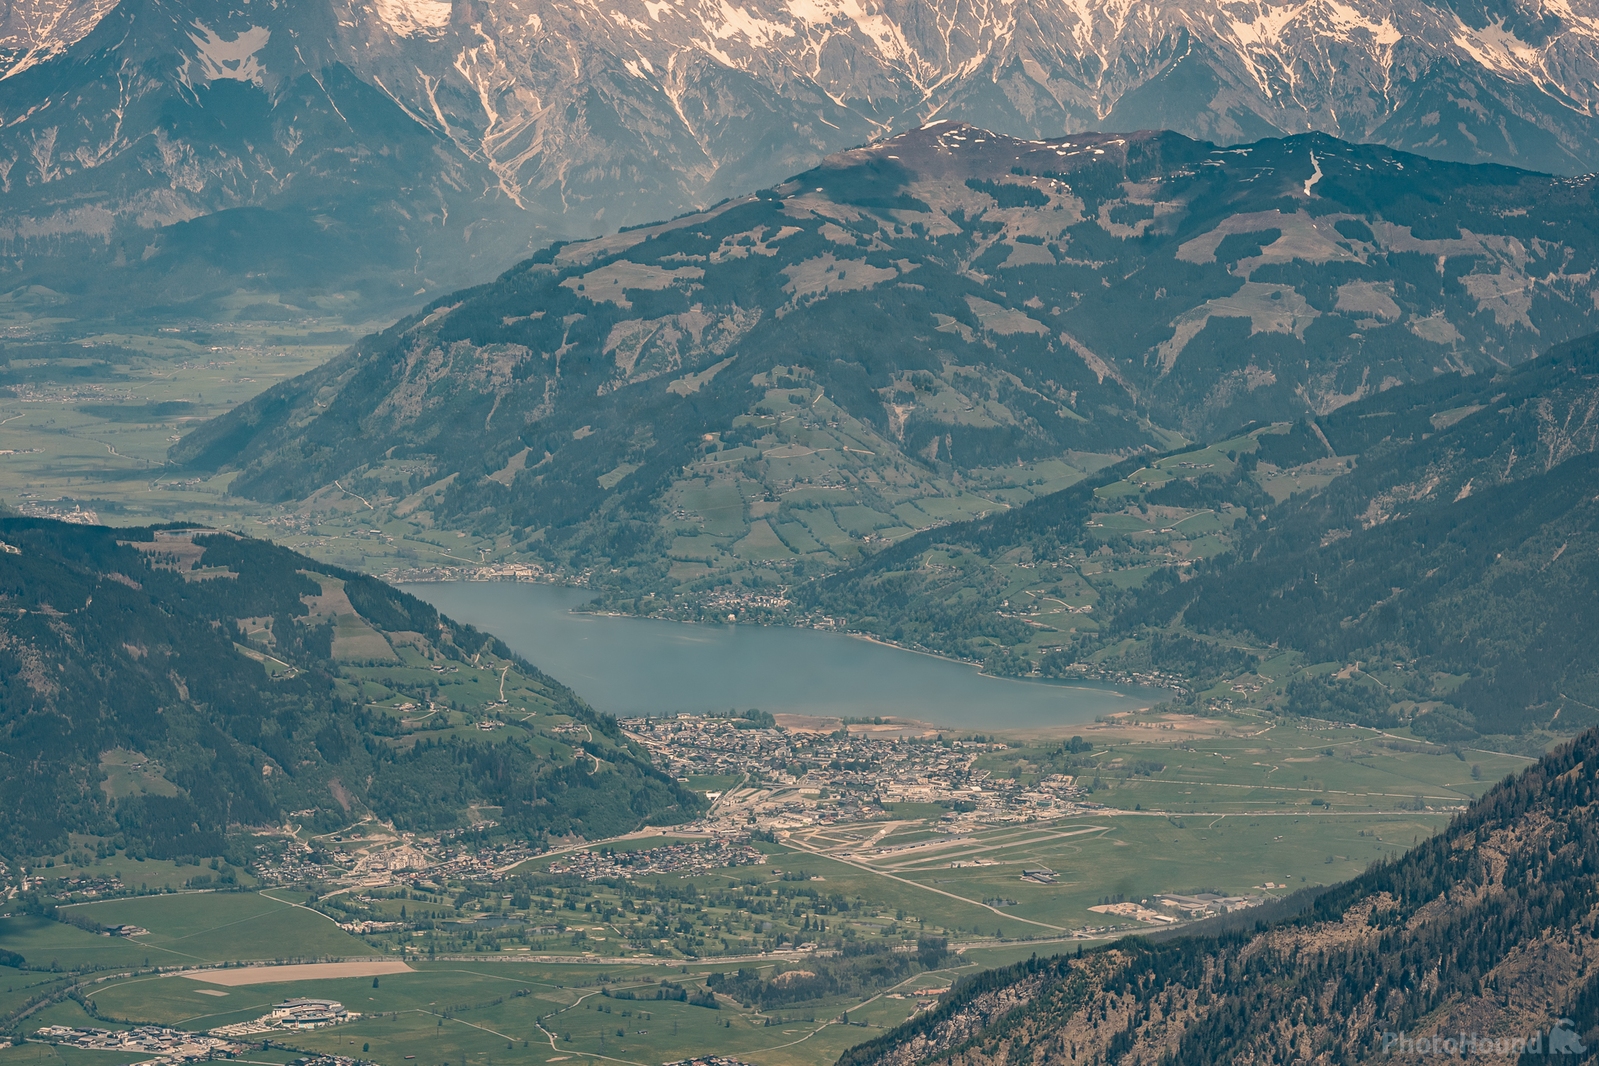 Image of Gipfelwelt at the Kitzsteinhorn by James Billings.